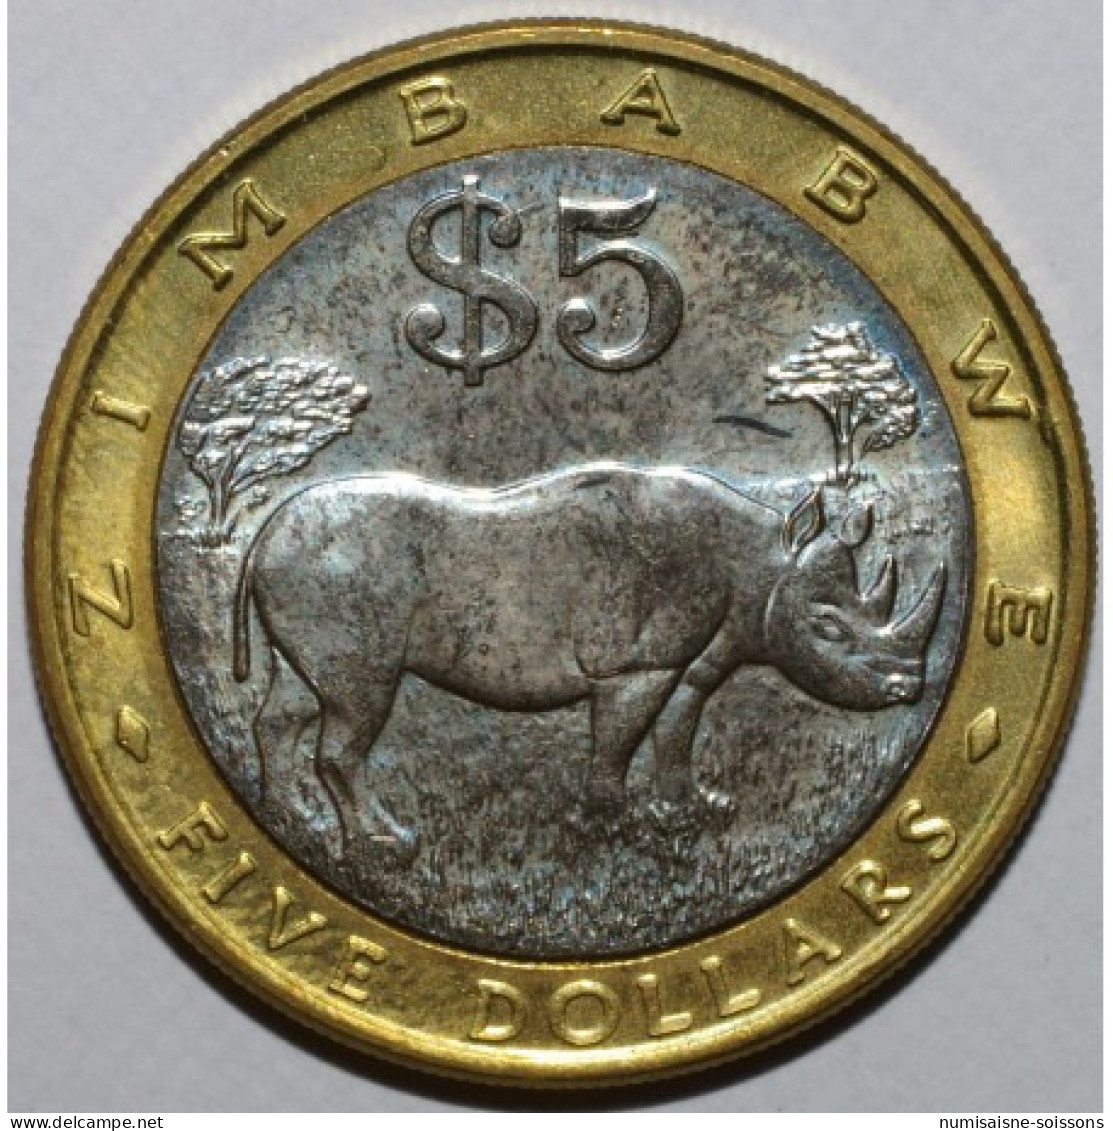 ZIMBABWE - KM 13 - 5 DOLLARS 2001 - RHINOCEROS - SPL - Zimbabwe